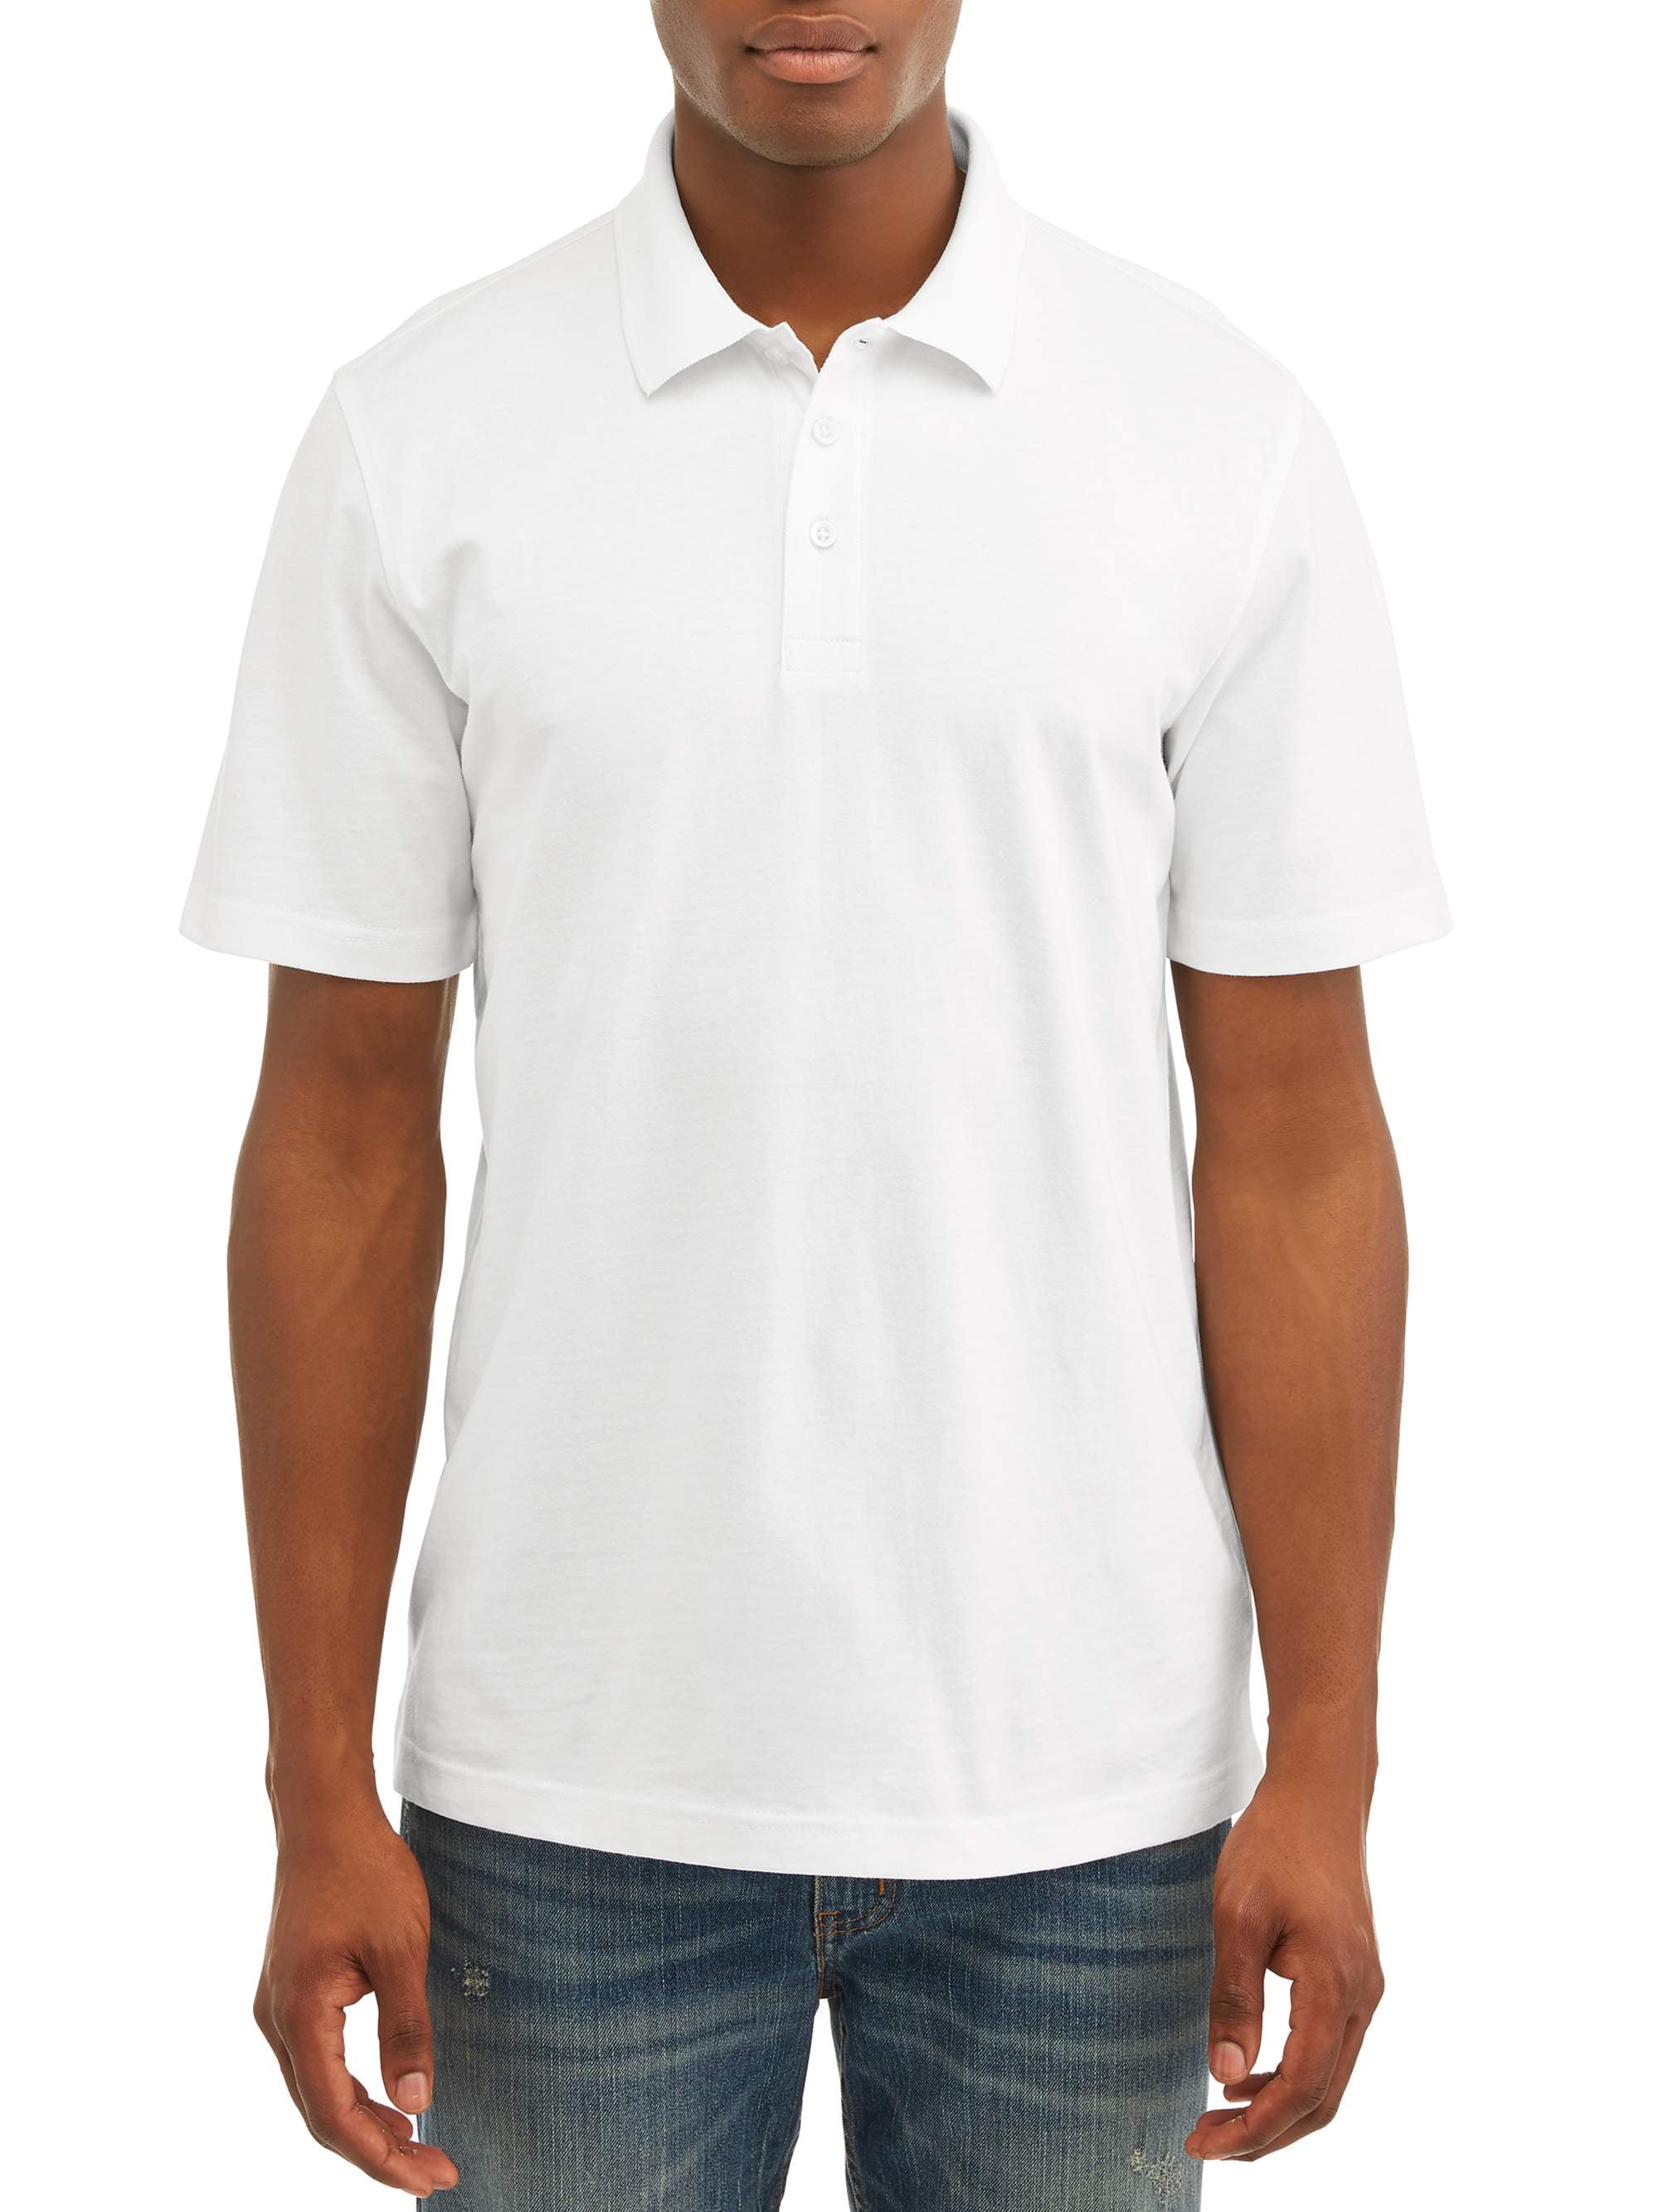 George Men's Short Sleeve Solid Polo Shirt - Walmart.com